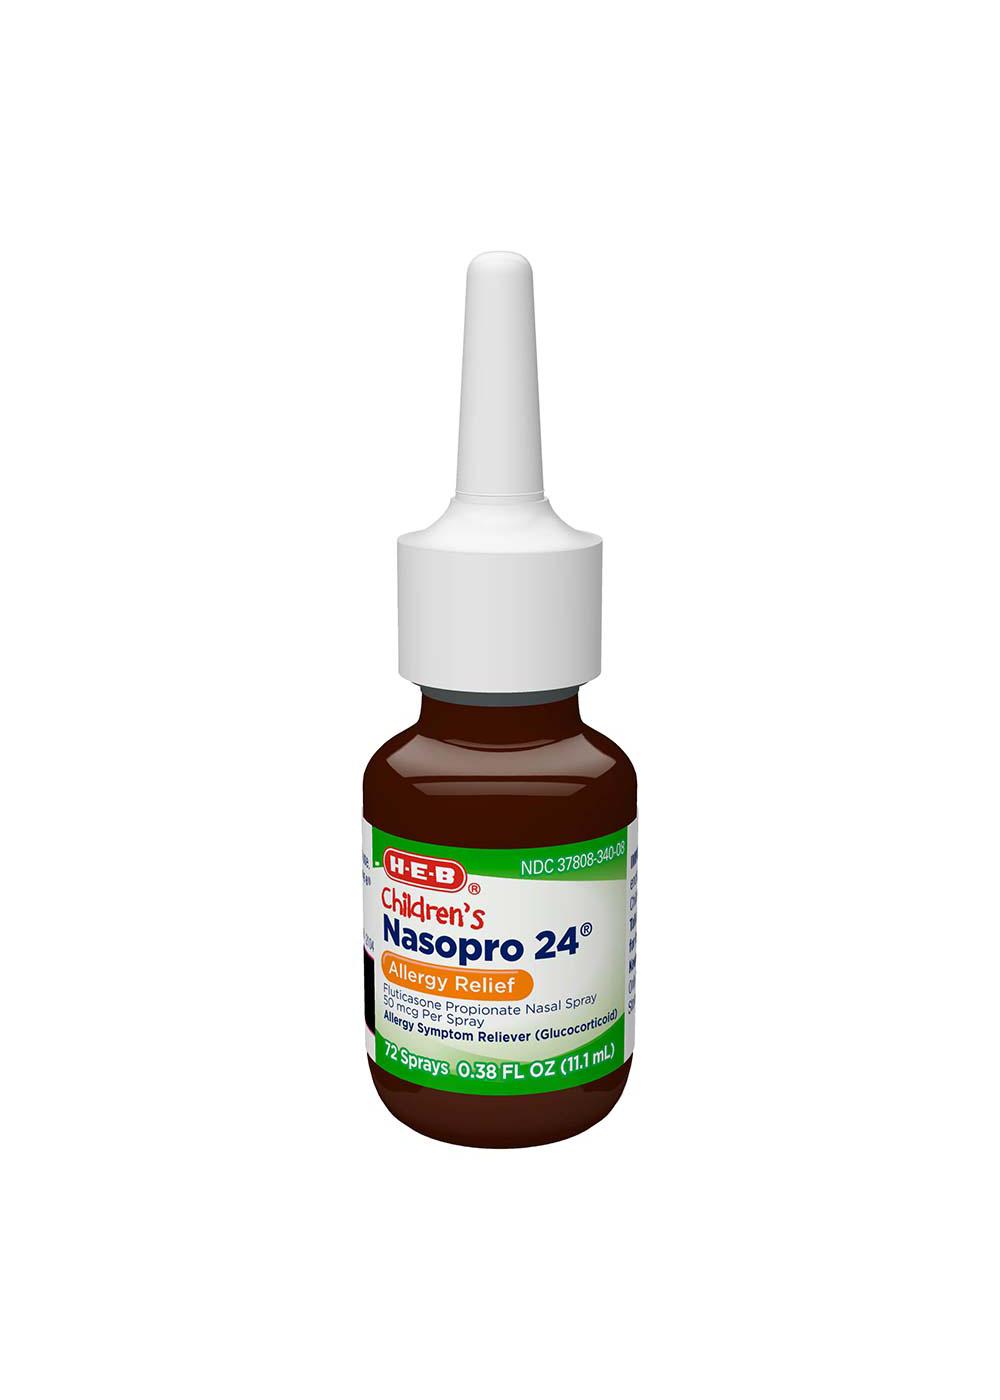 H-E-B Children's Nasopro 24 Allergy Relief Spray; image 2 of 2